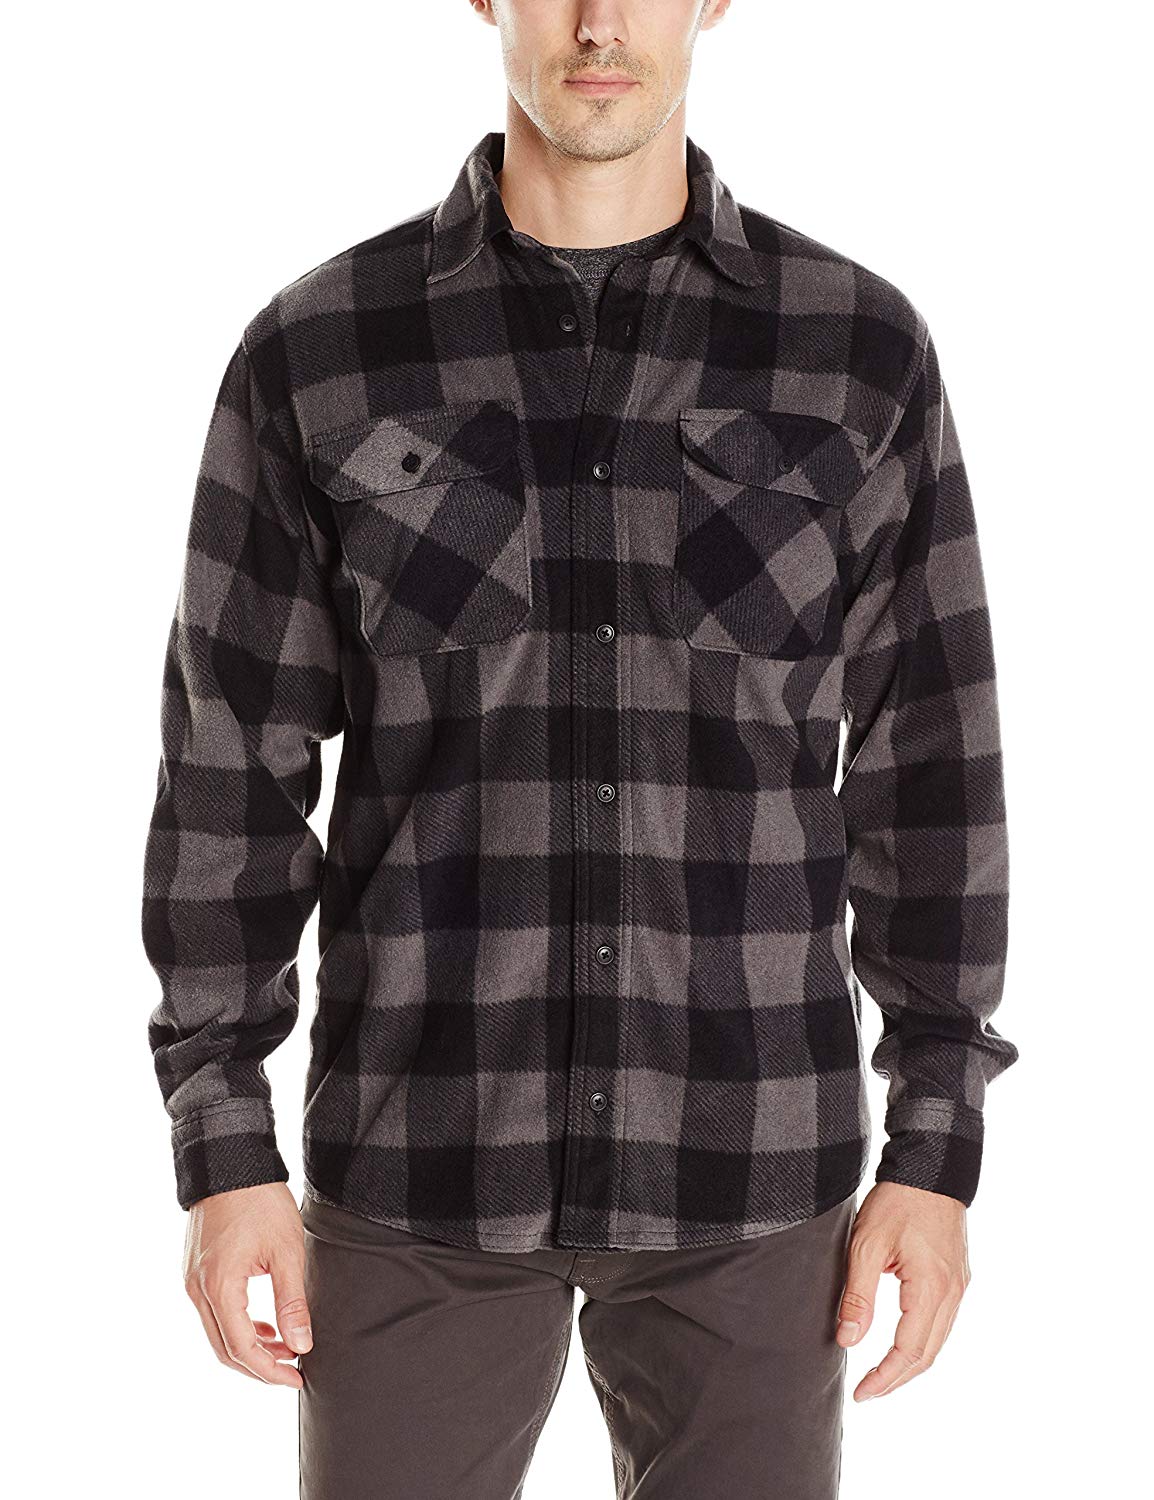 Wrangler Authentics Men's Long Sleeve Plaid Fleece Shirt